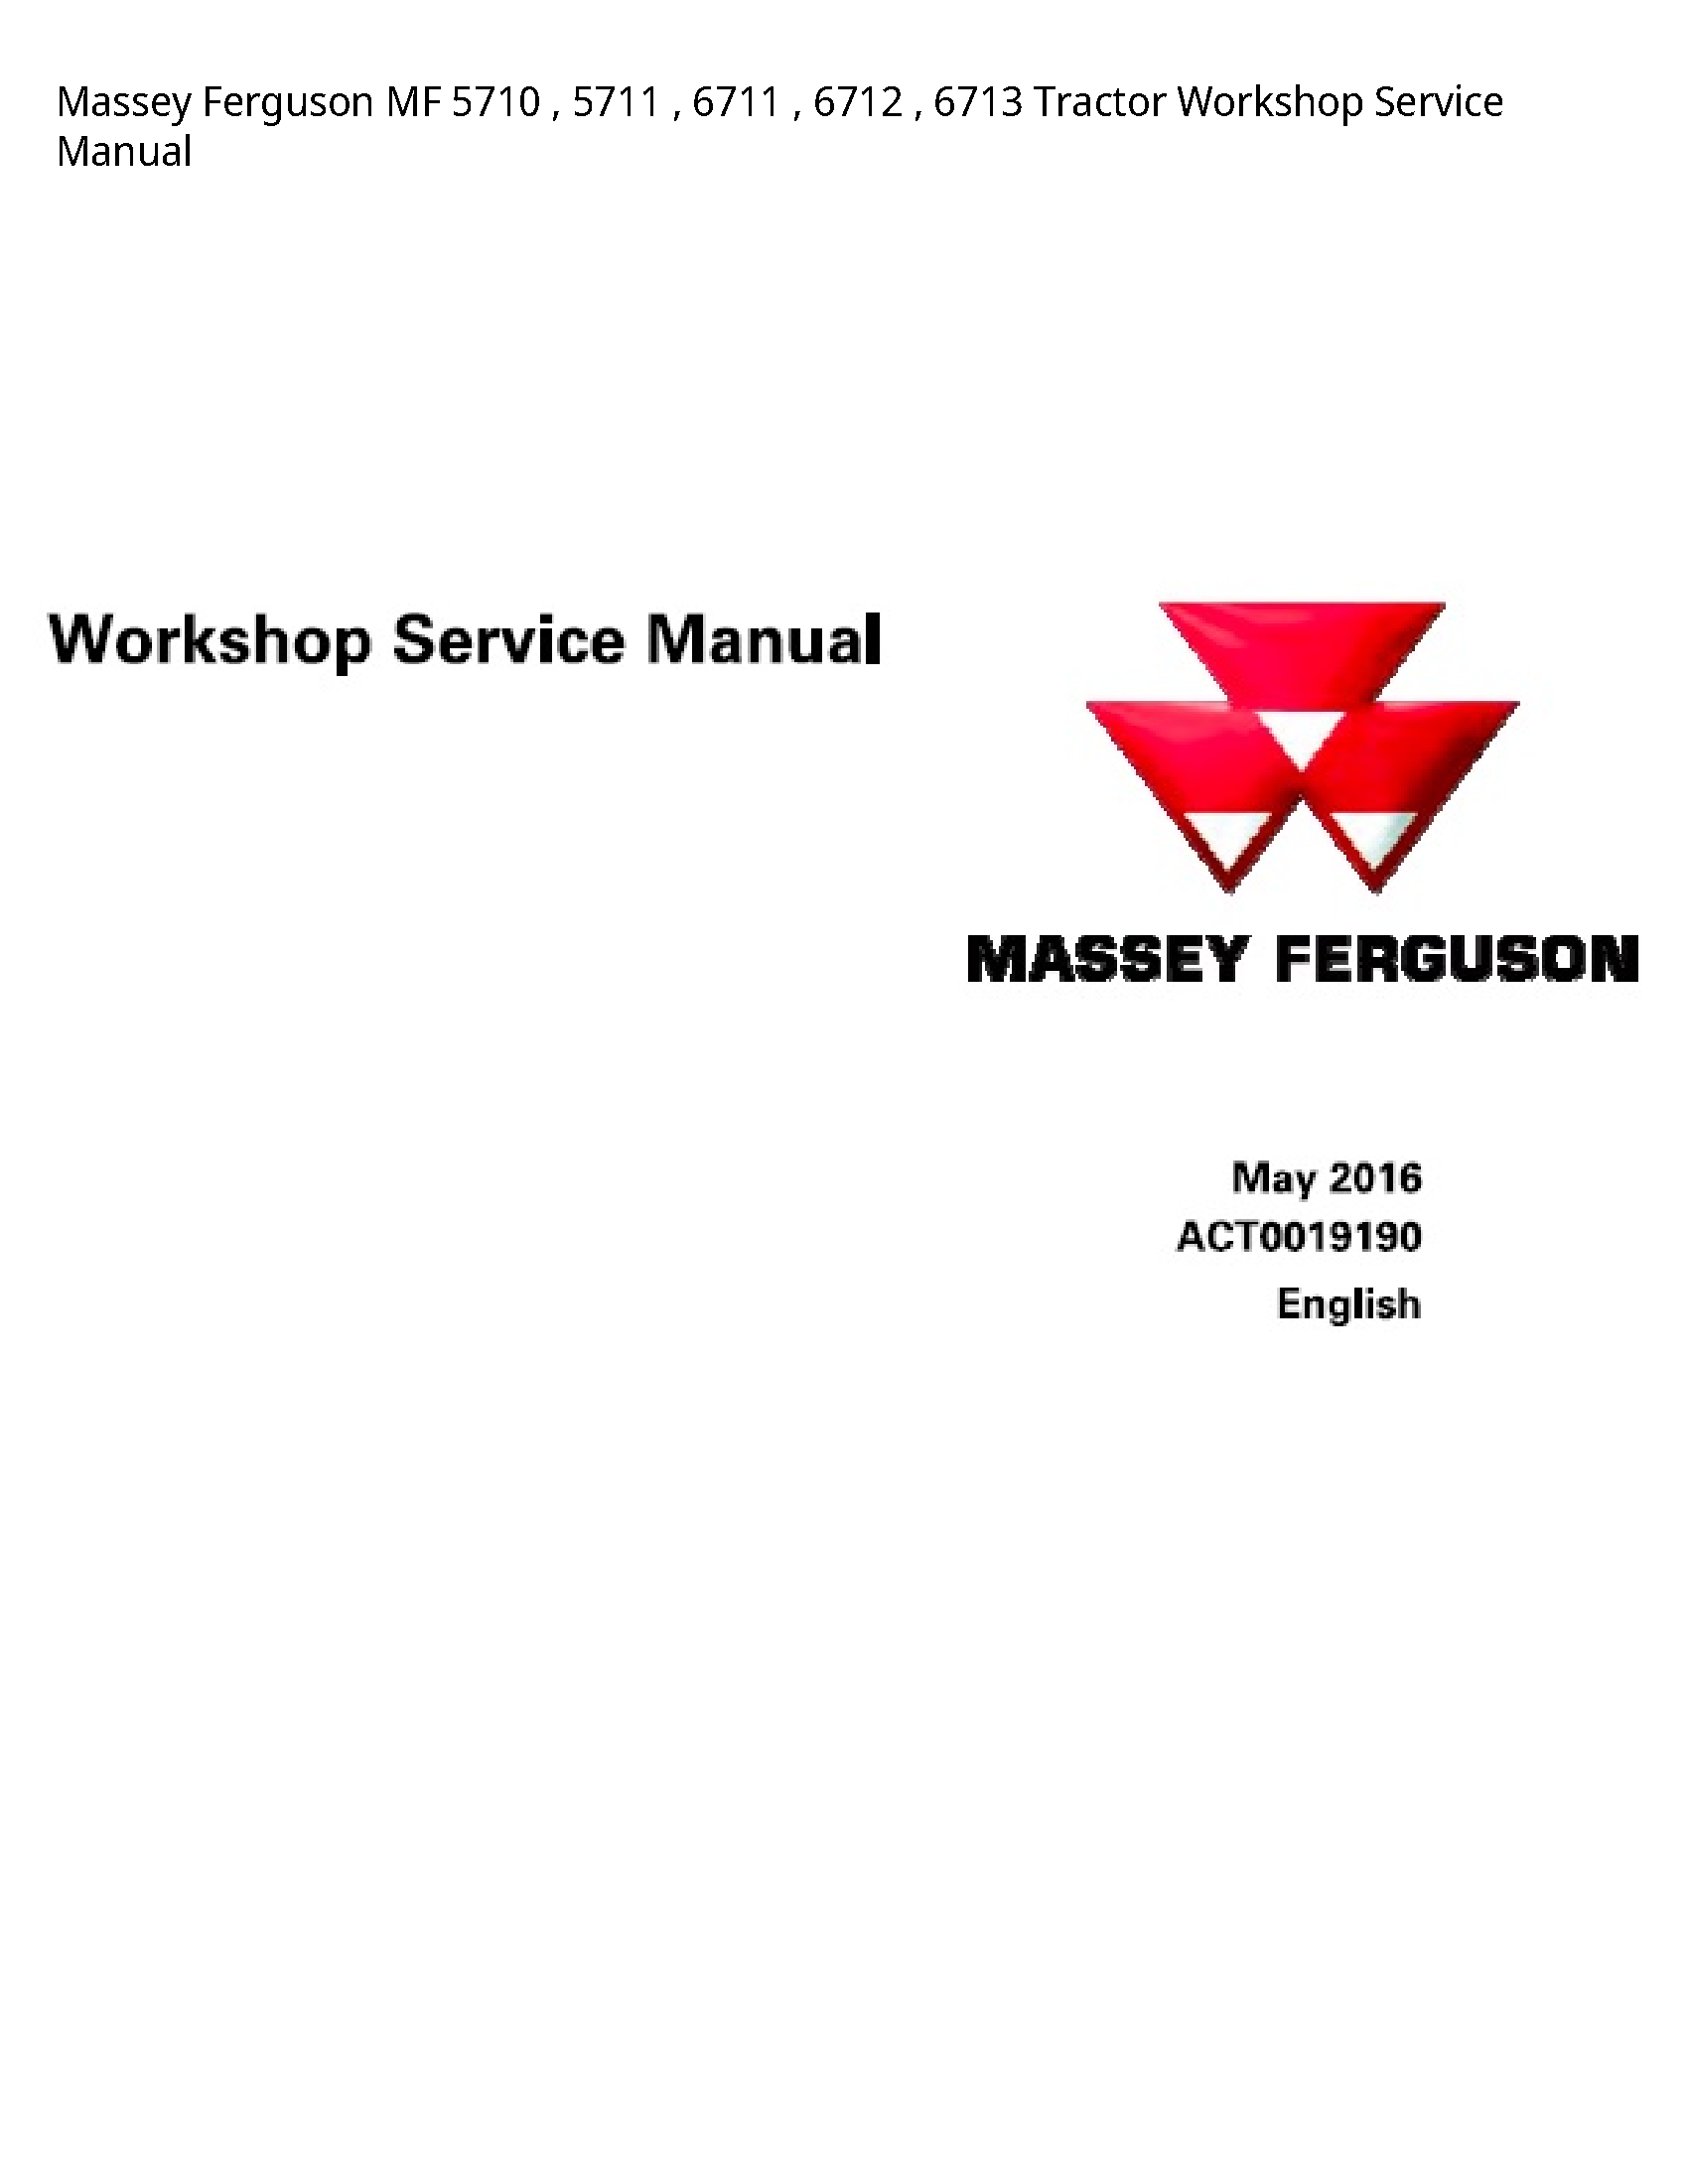 Massey Ferguson 5710 MF Tractor Service manual